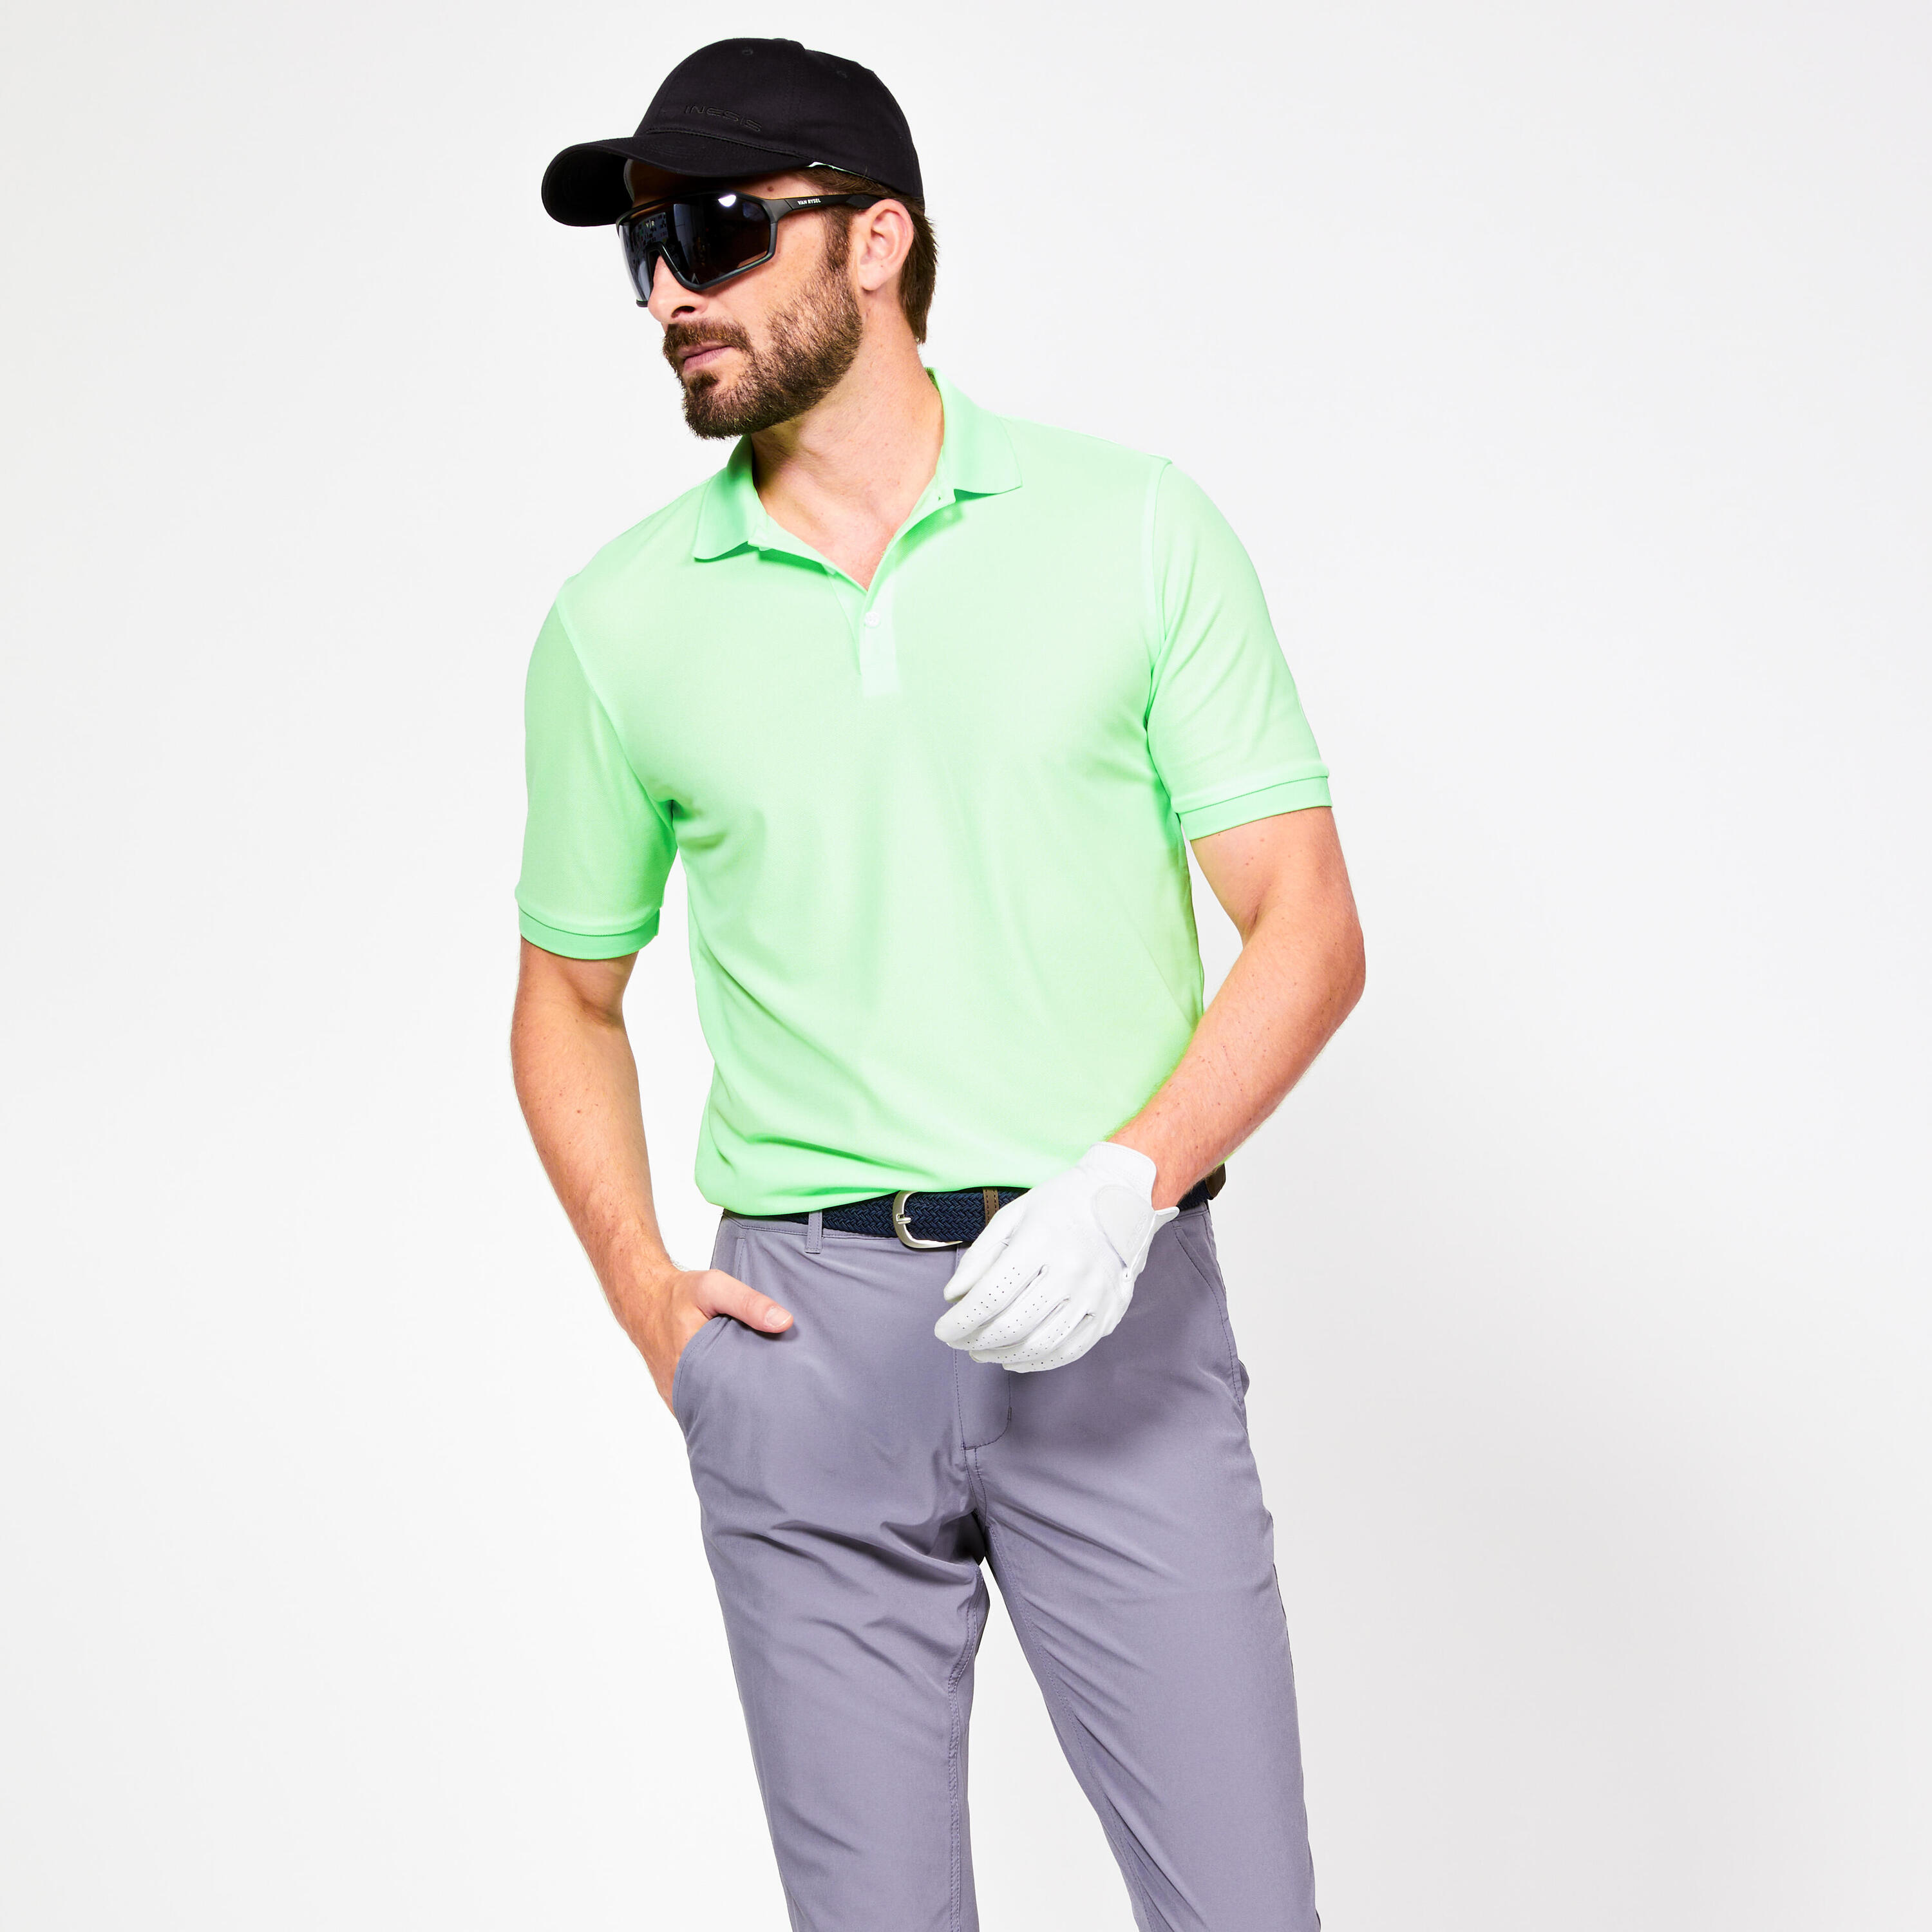 INESIS Men's golf short sleeve polo shirt - WW500 neon green